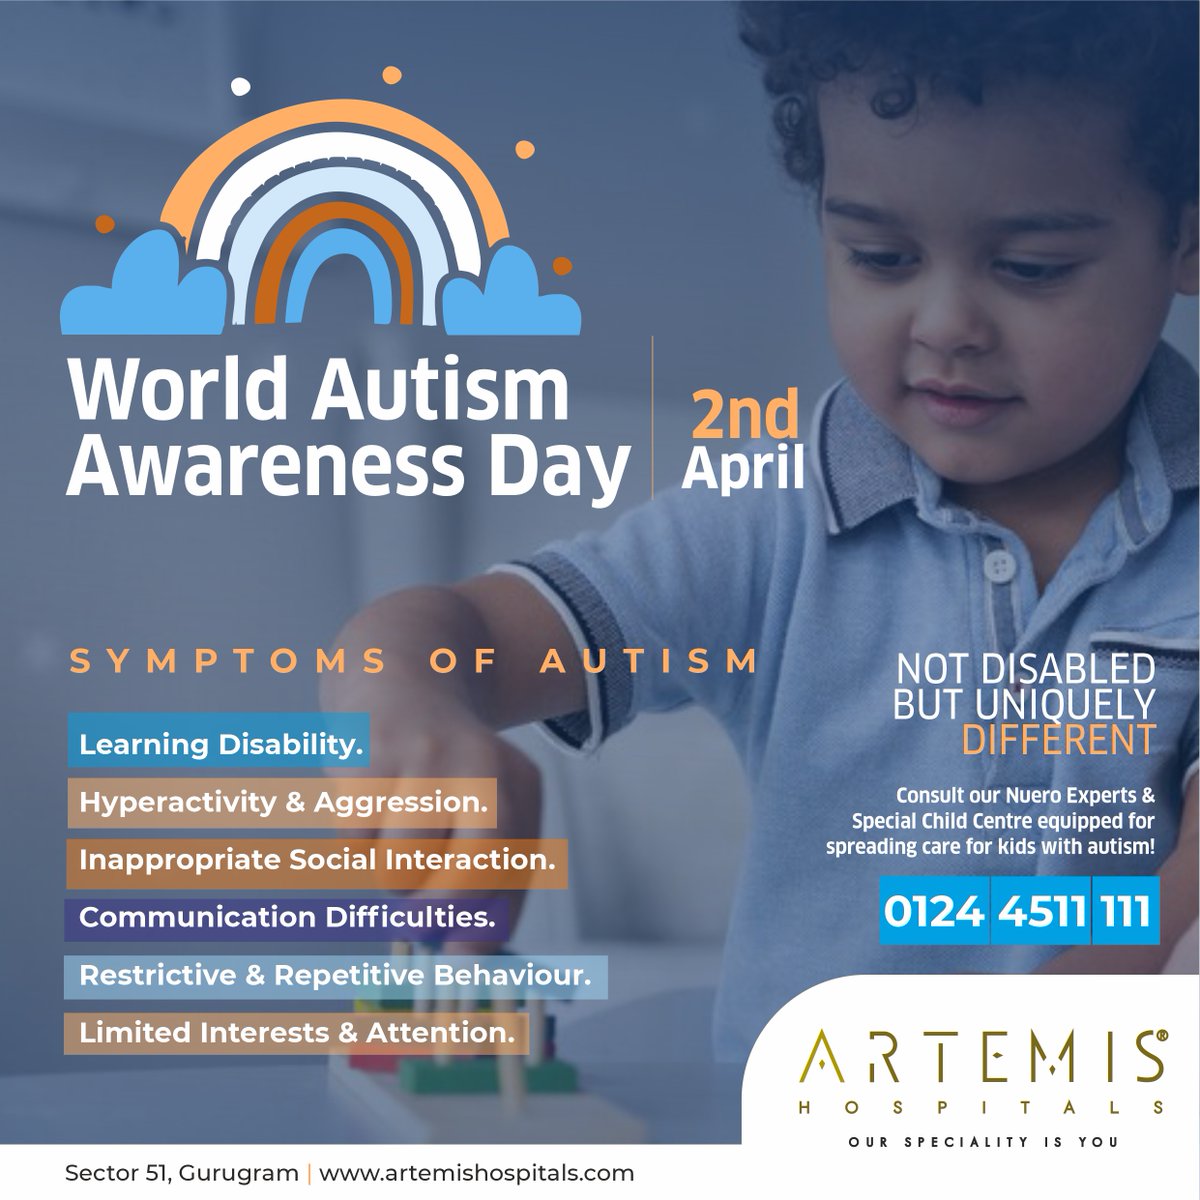 On this World Autism Awareness Day, Let's foster understanding and support for individuals with autism spectrum disorder. #WorldAutismAwarenessDay #AutismSymptoms #ArtemisCares #UnderstandingAutism #AcceptanceMatters #ArtemisHospitals